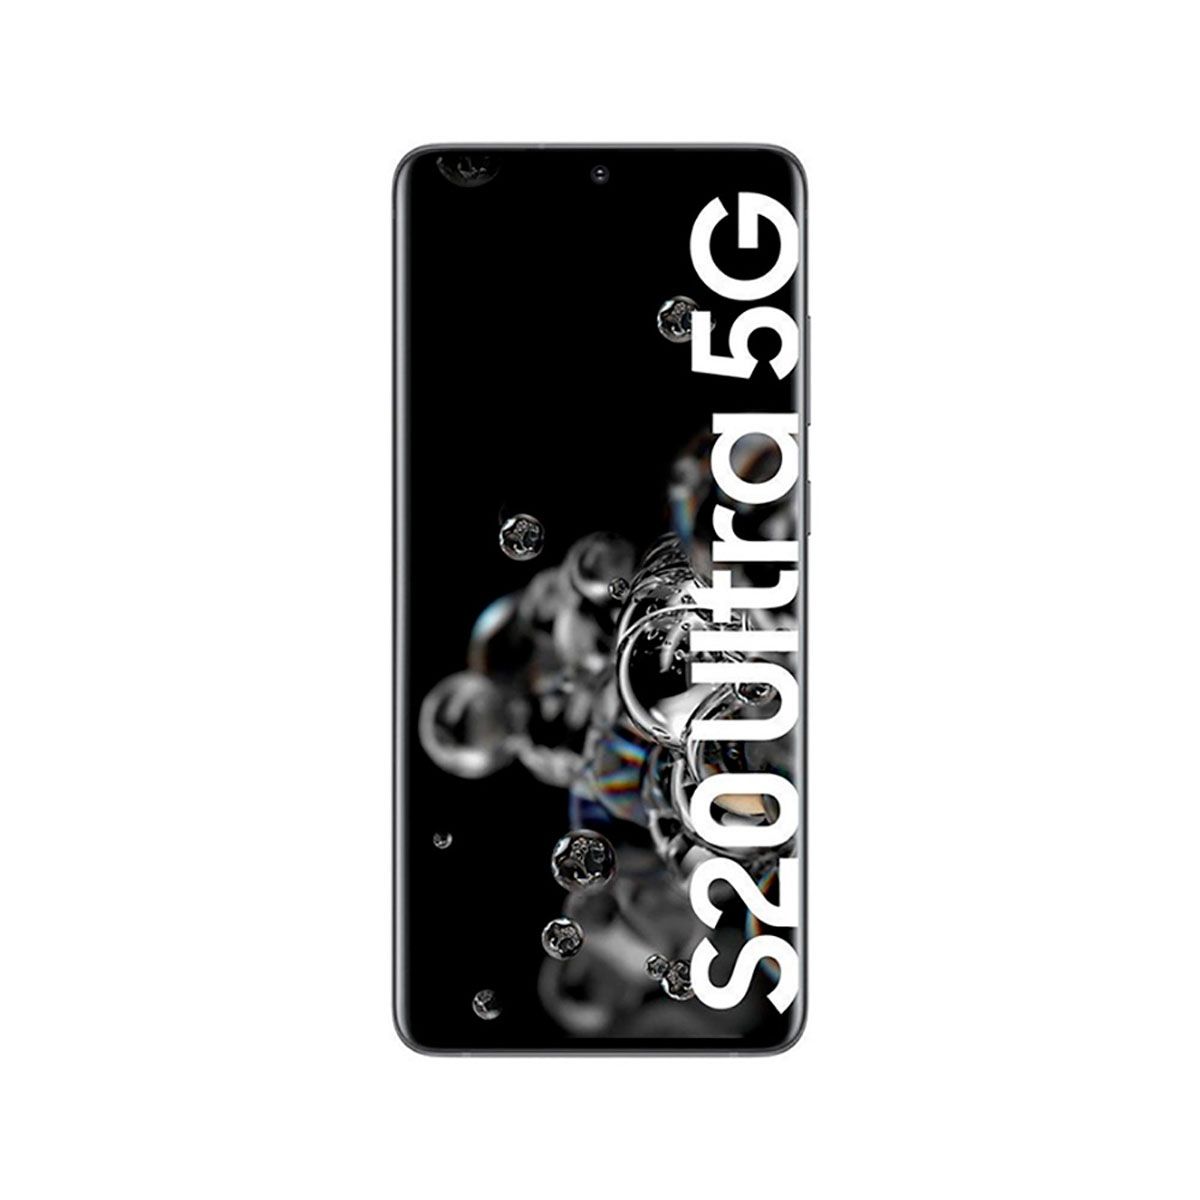 Samsung Galaxy S20 Ultra 5G 12GB/128GB Gray (Cosmic Gray) Dual SIM G988B